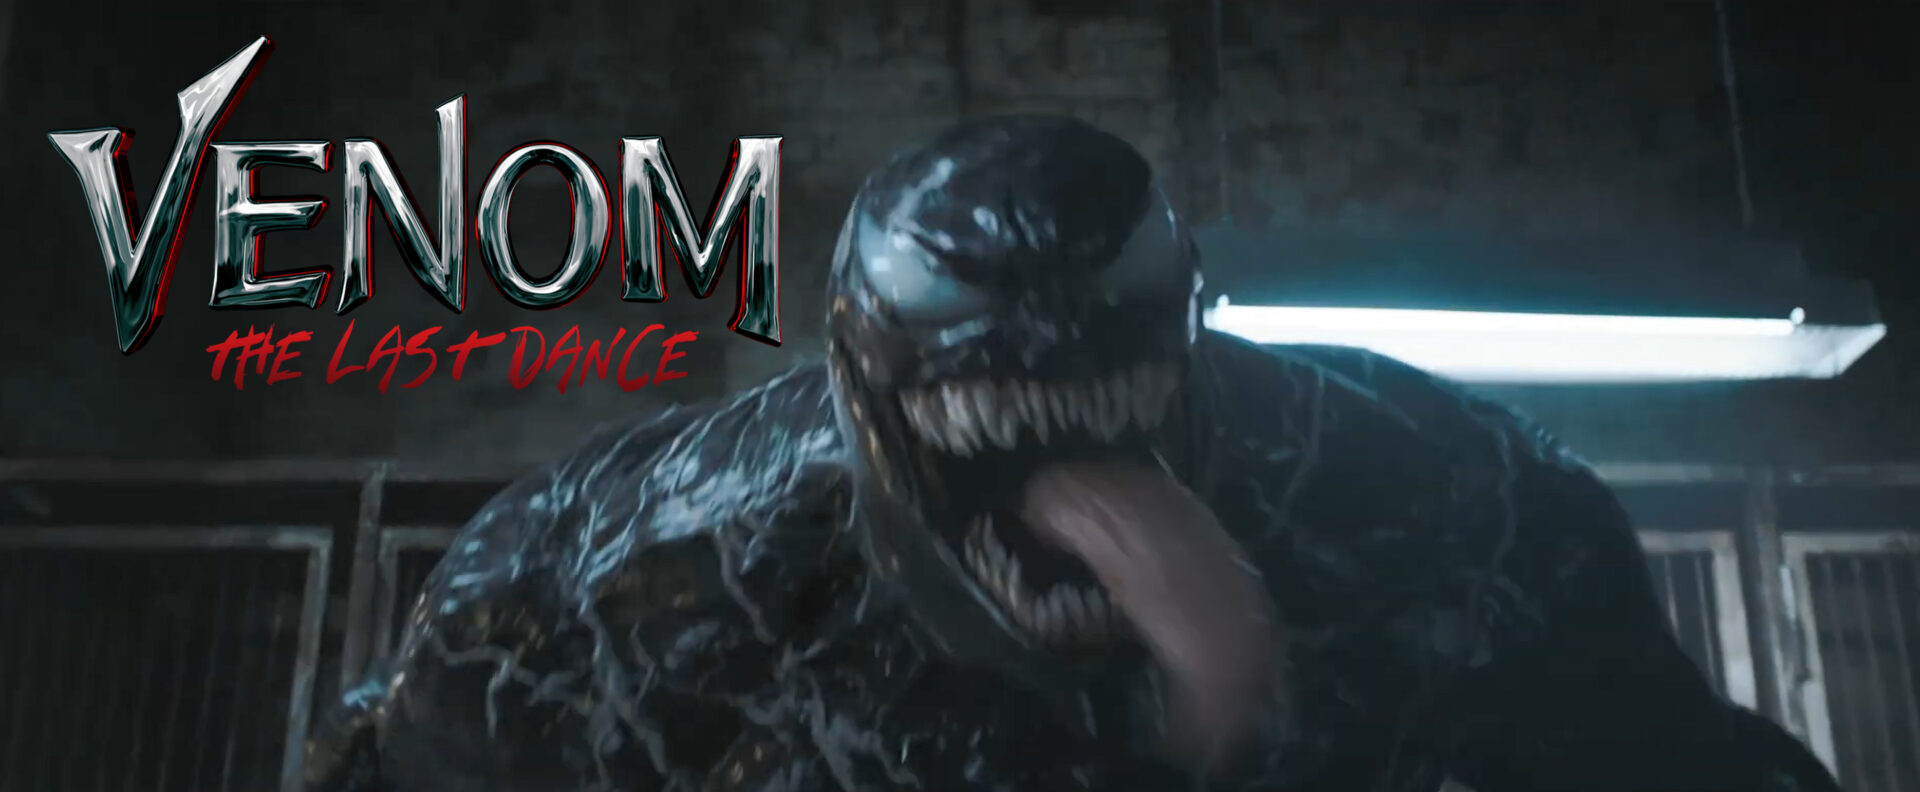 venom the last dance theatrical trailer banner